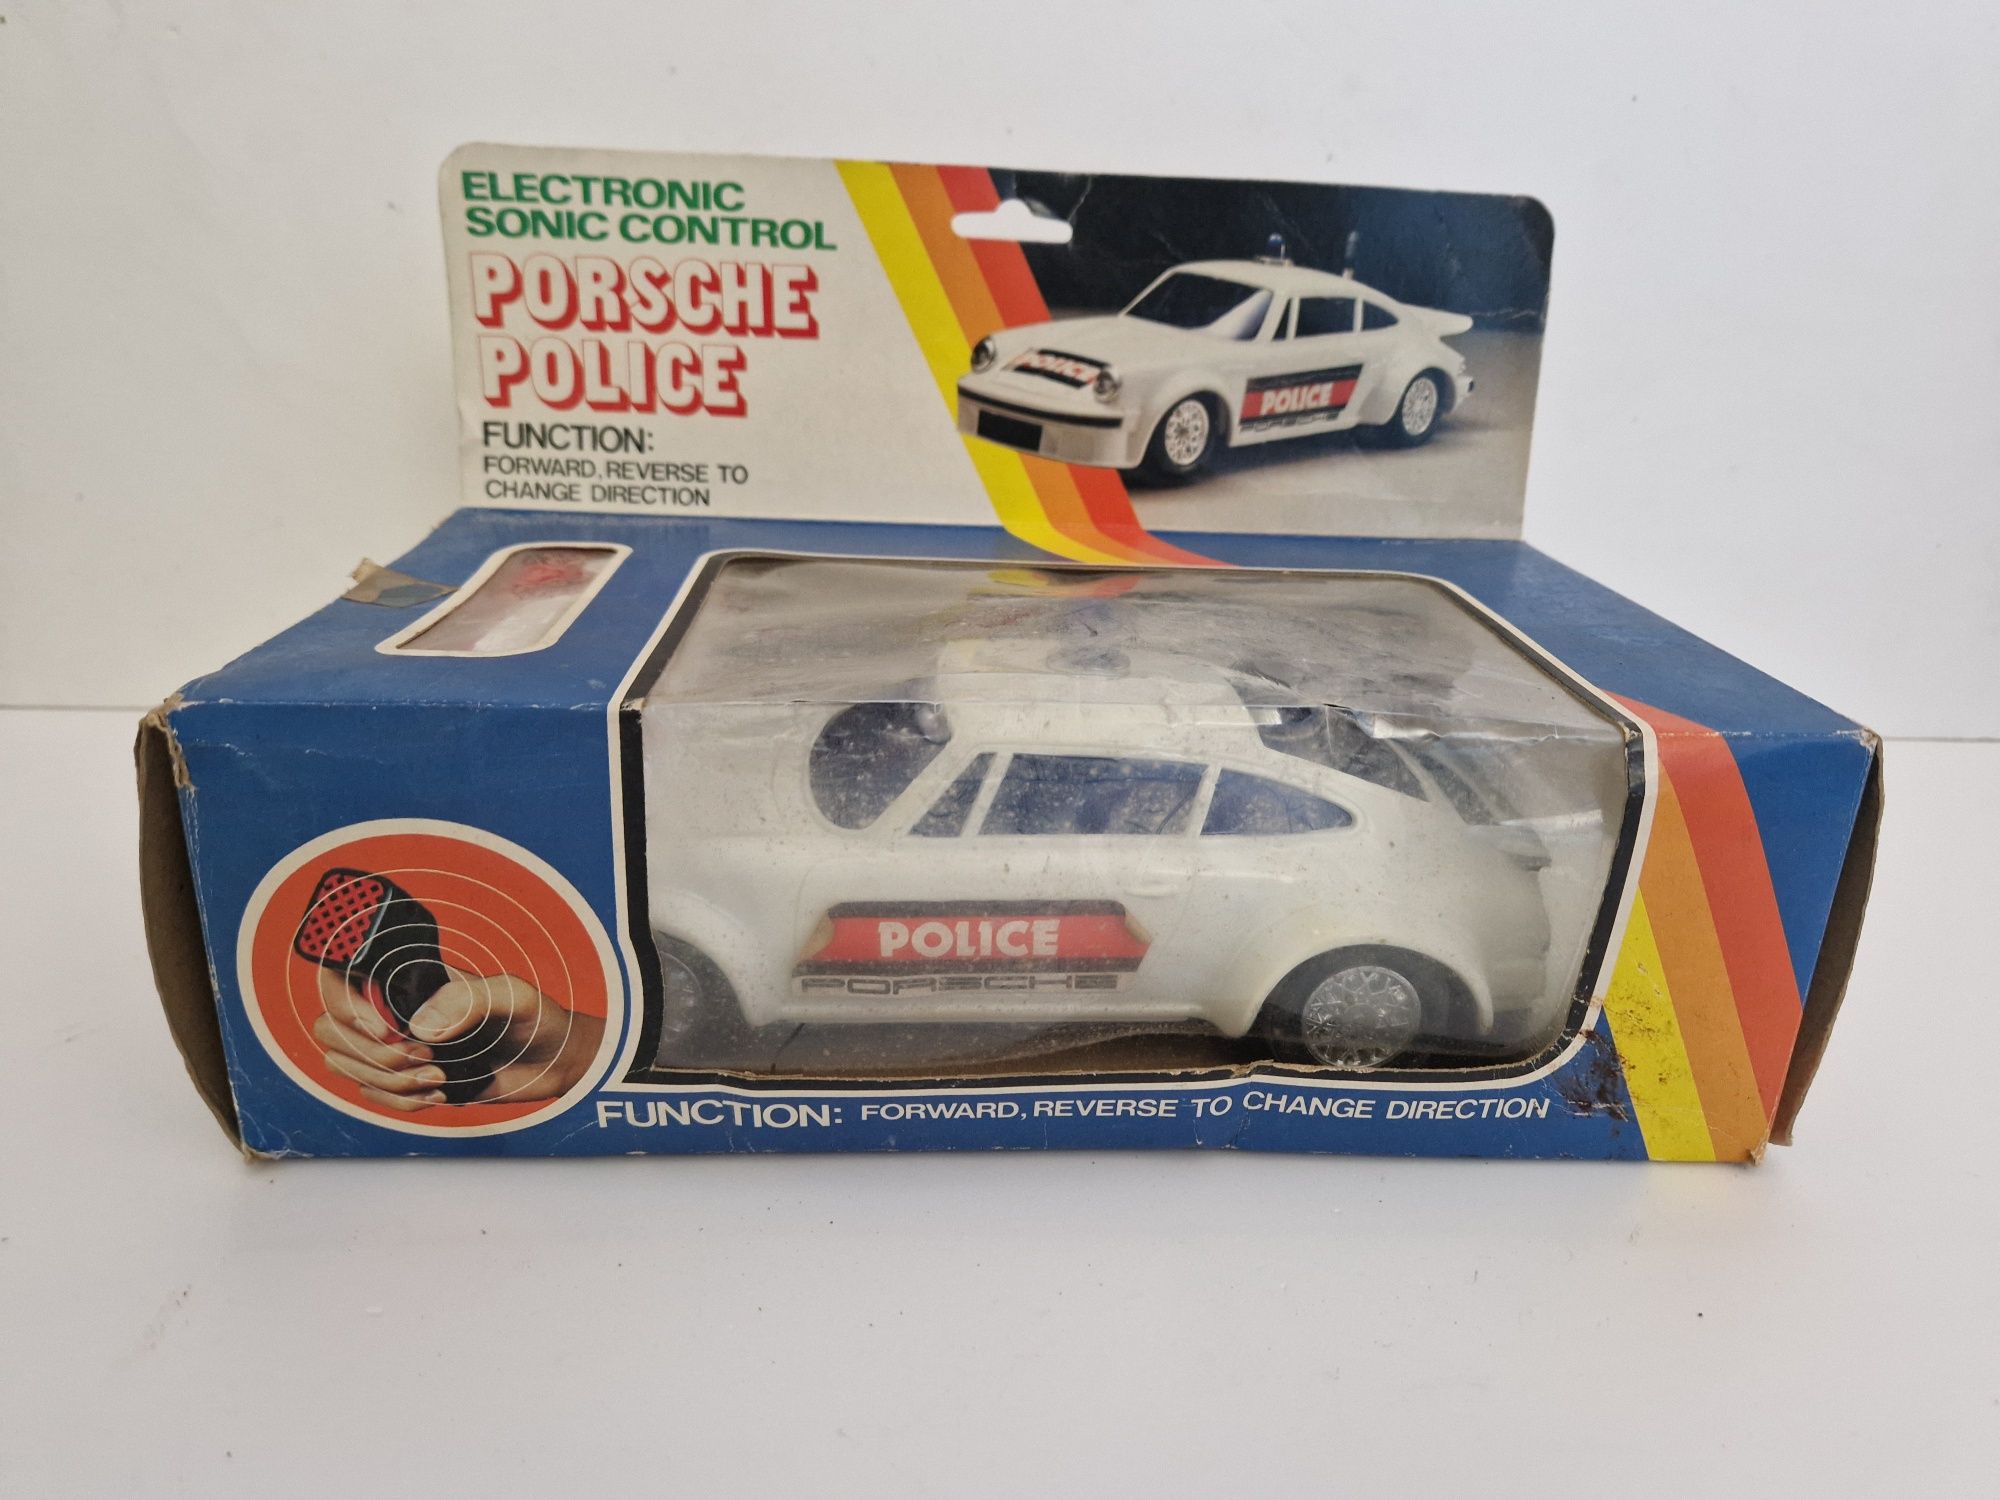 Porche Police - Electronic Sonic Control - Vintage